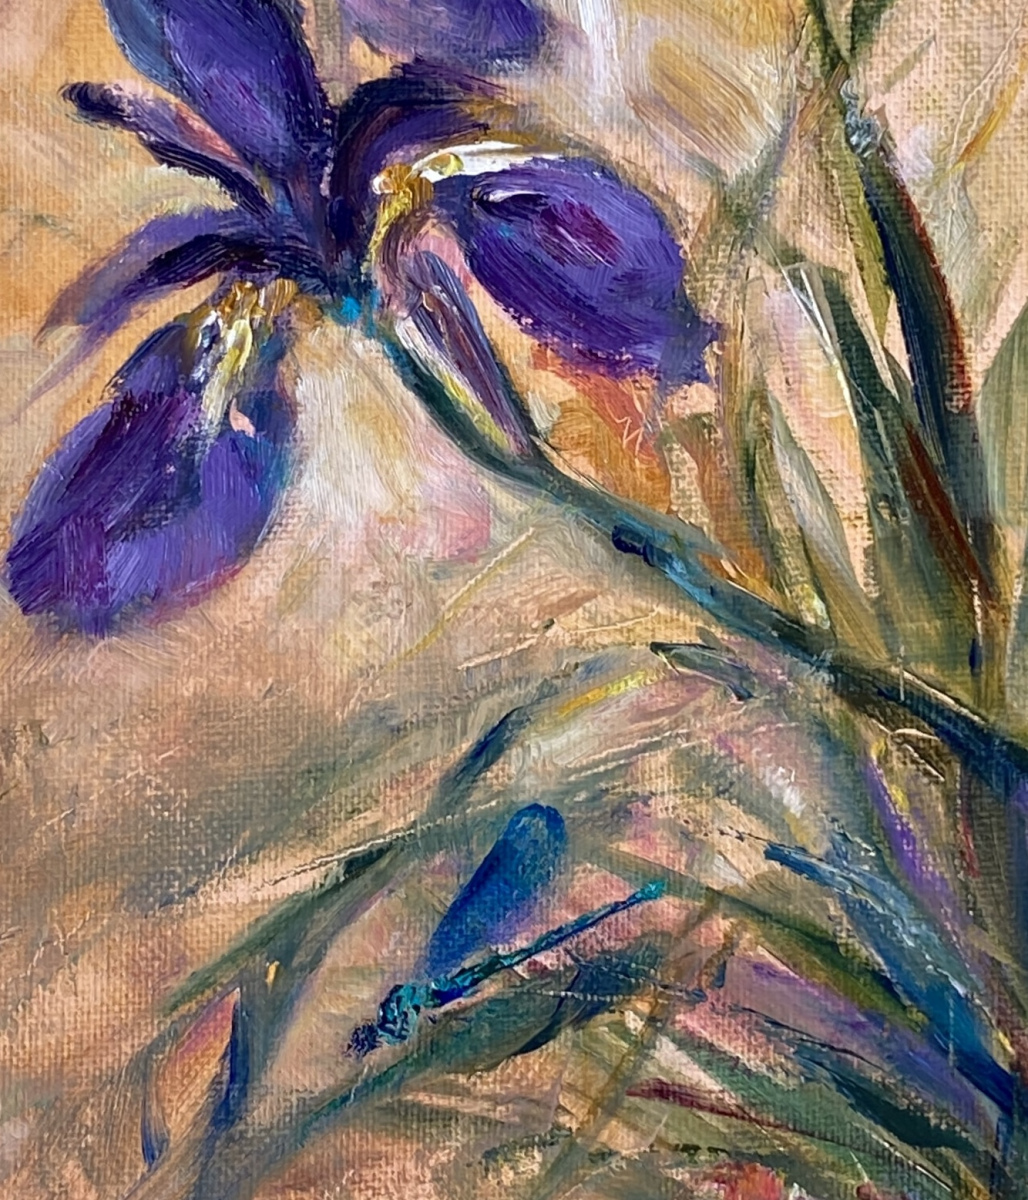 Detail of "Iris Basking with Damselfly", plein air oil painting, 12" x 9"